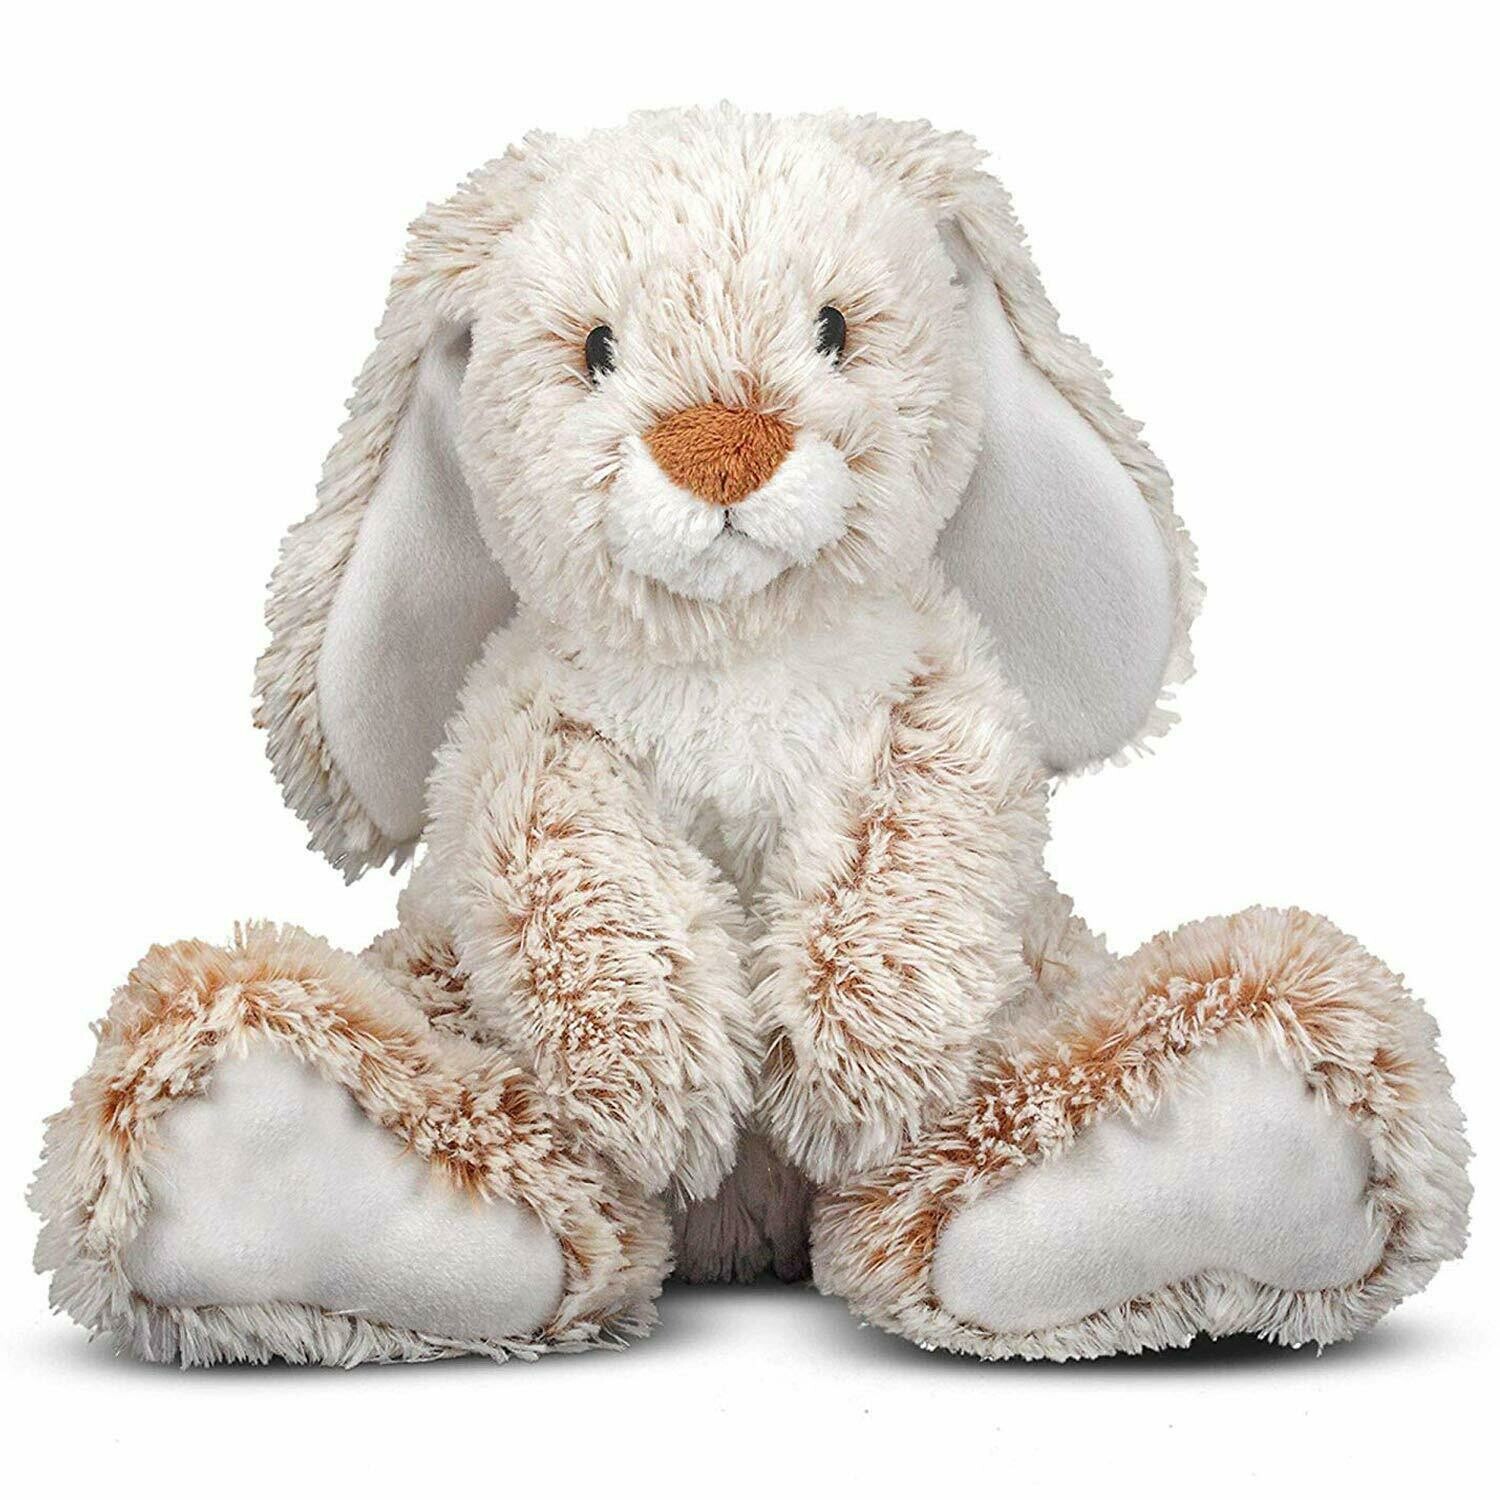 GRIFIL ZERO Bunny Rabbit Stuffed Animal Plush Toy Soft Fabric